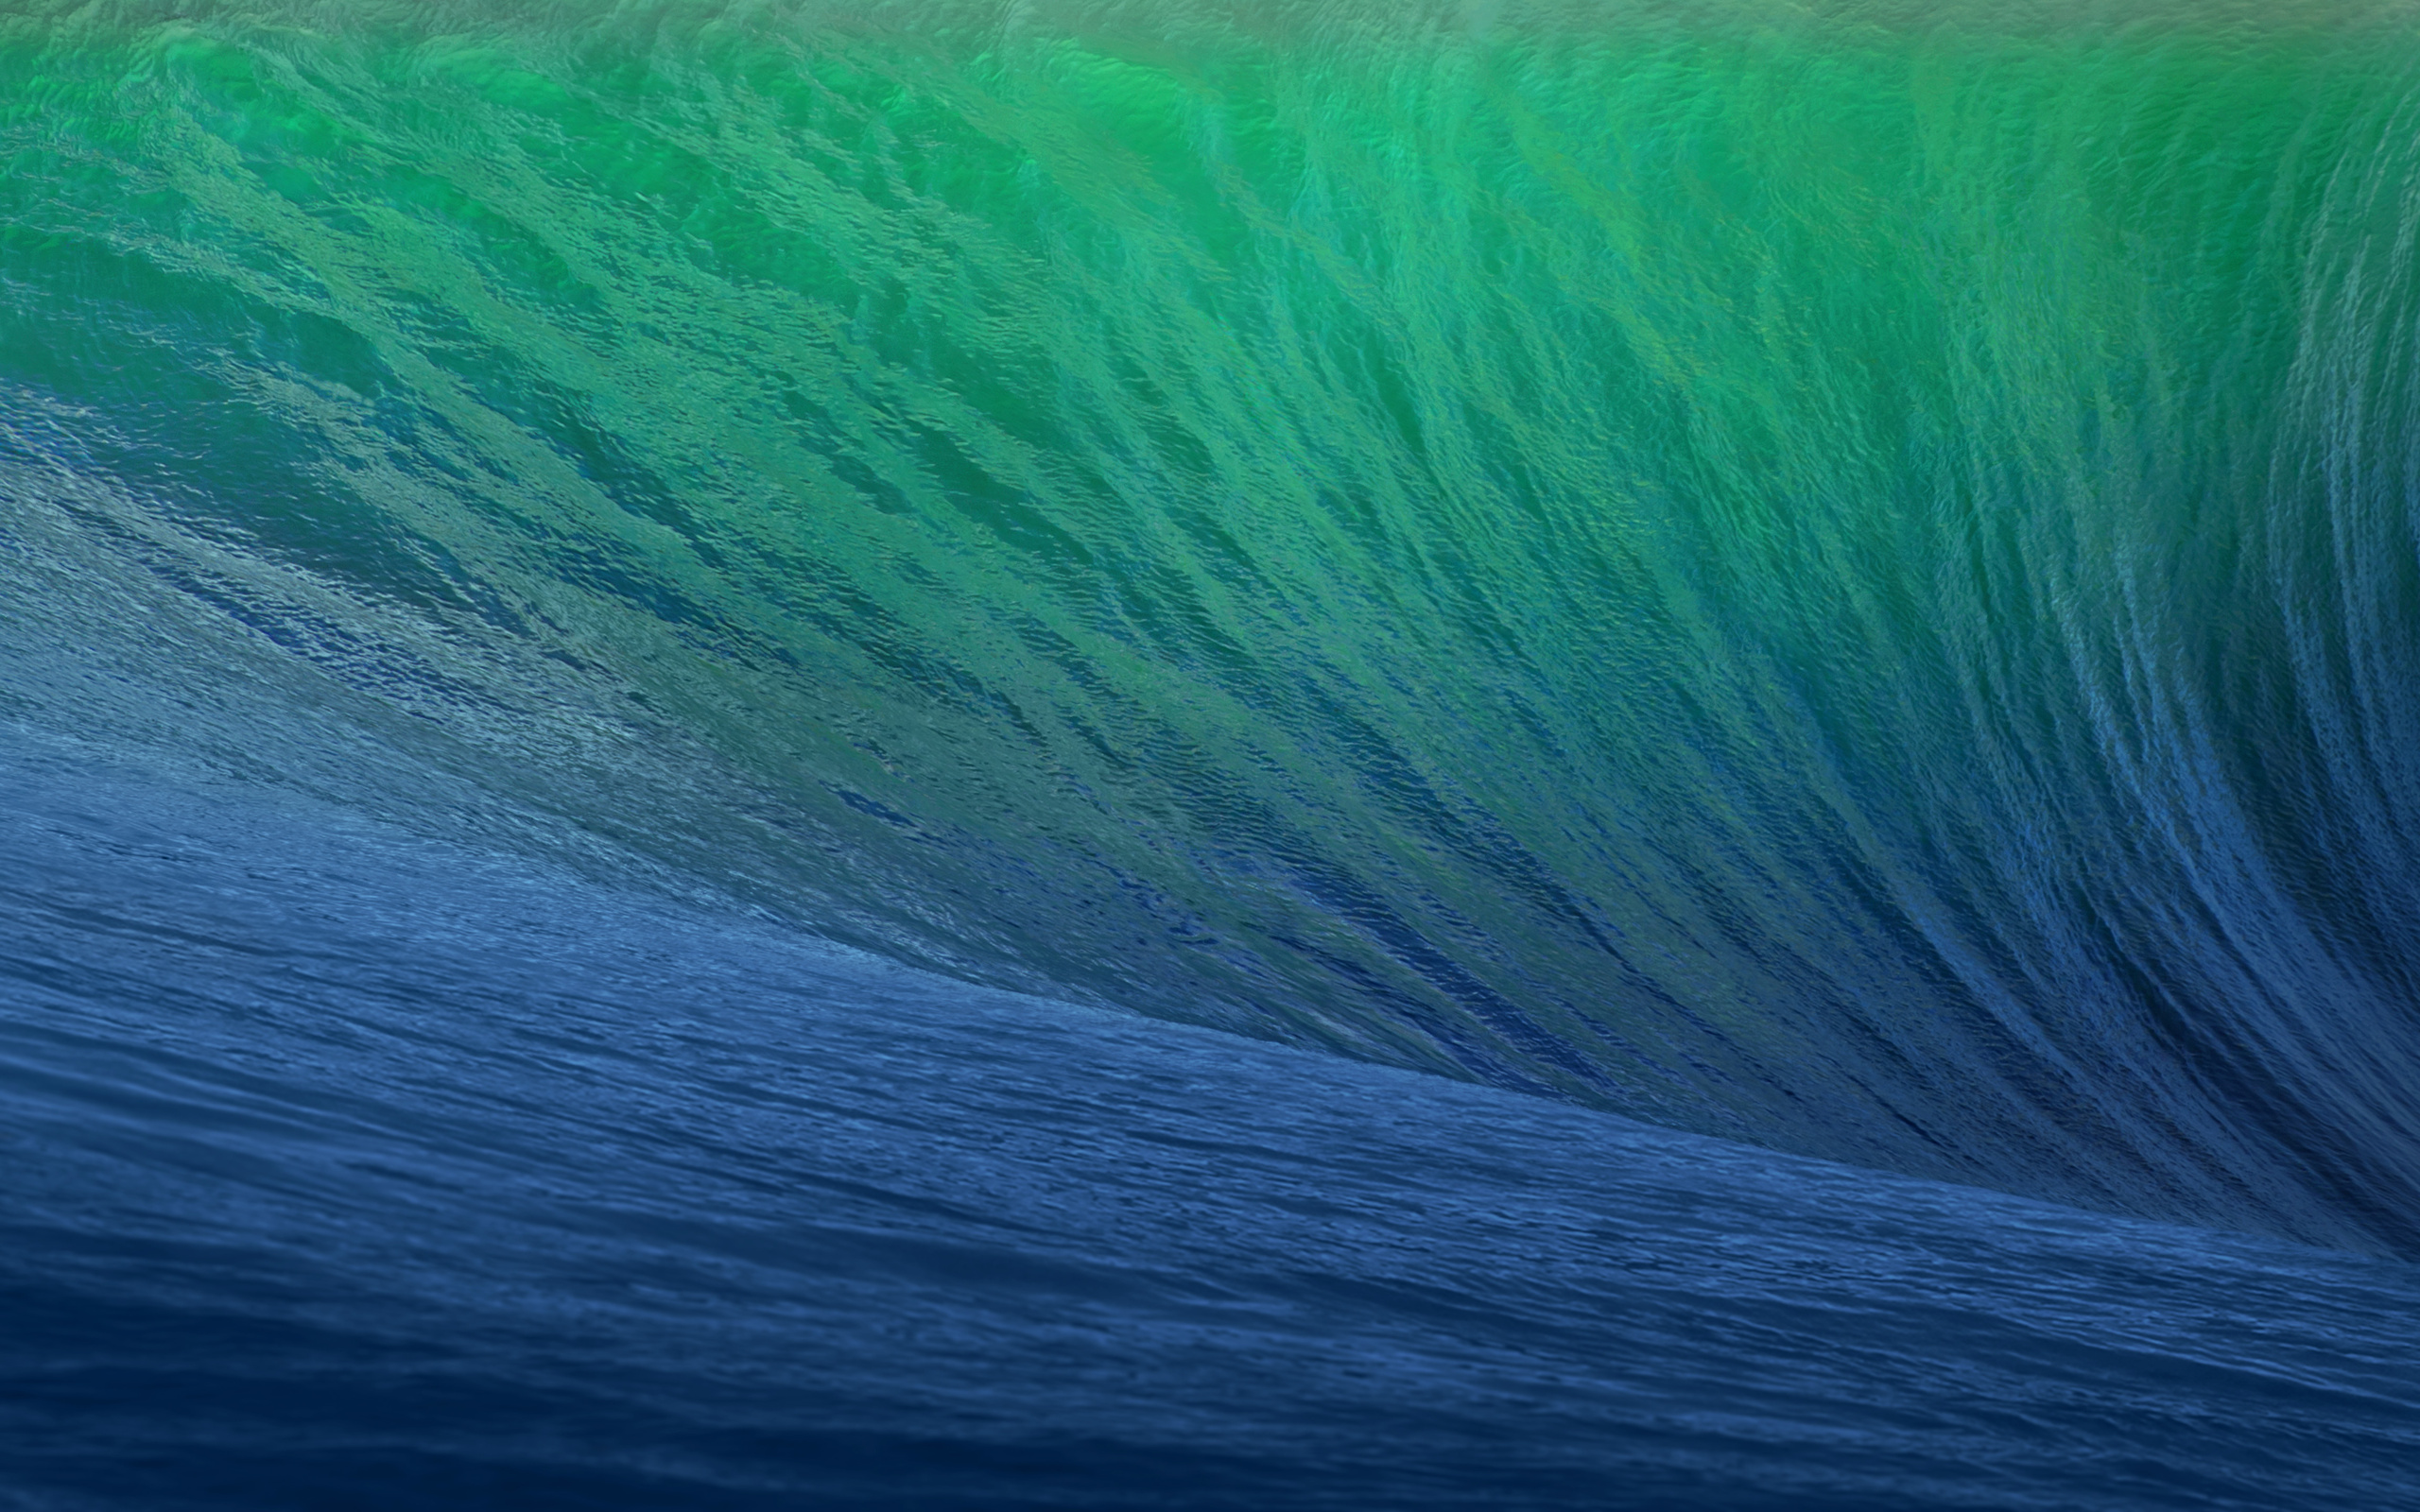 Apple Osx Mavericks Mac Puter Ocean Sea Waves Abstract Wallpaper